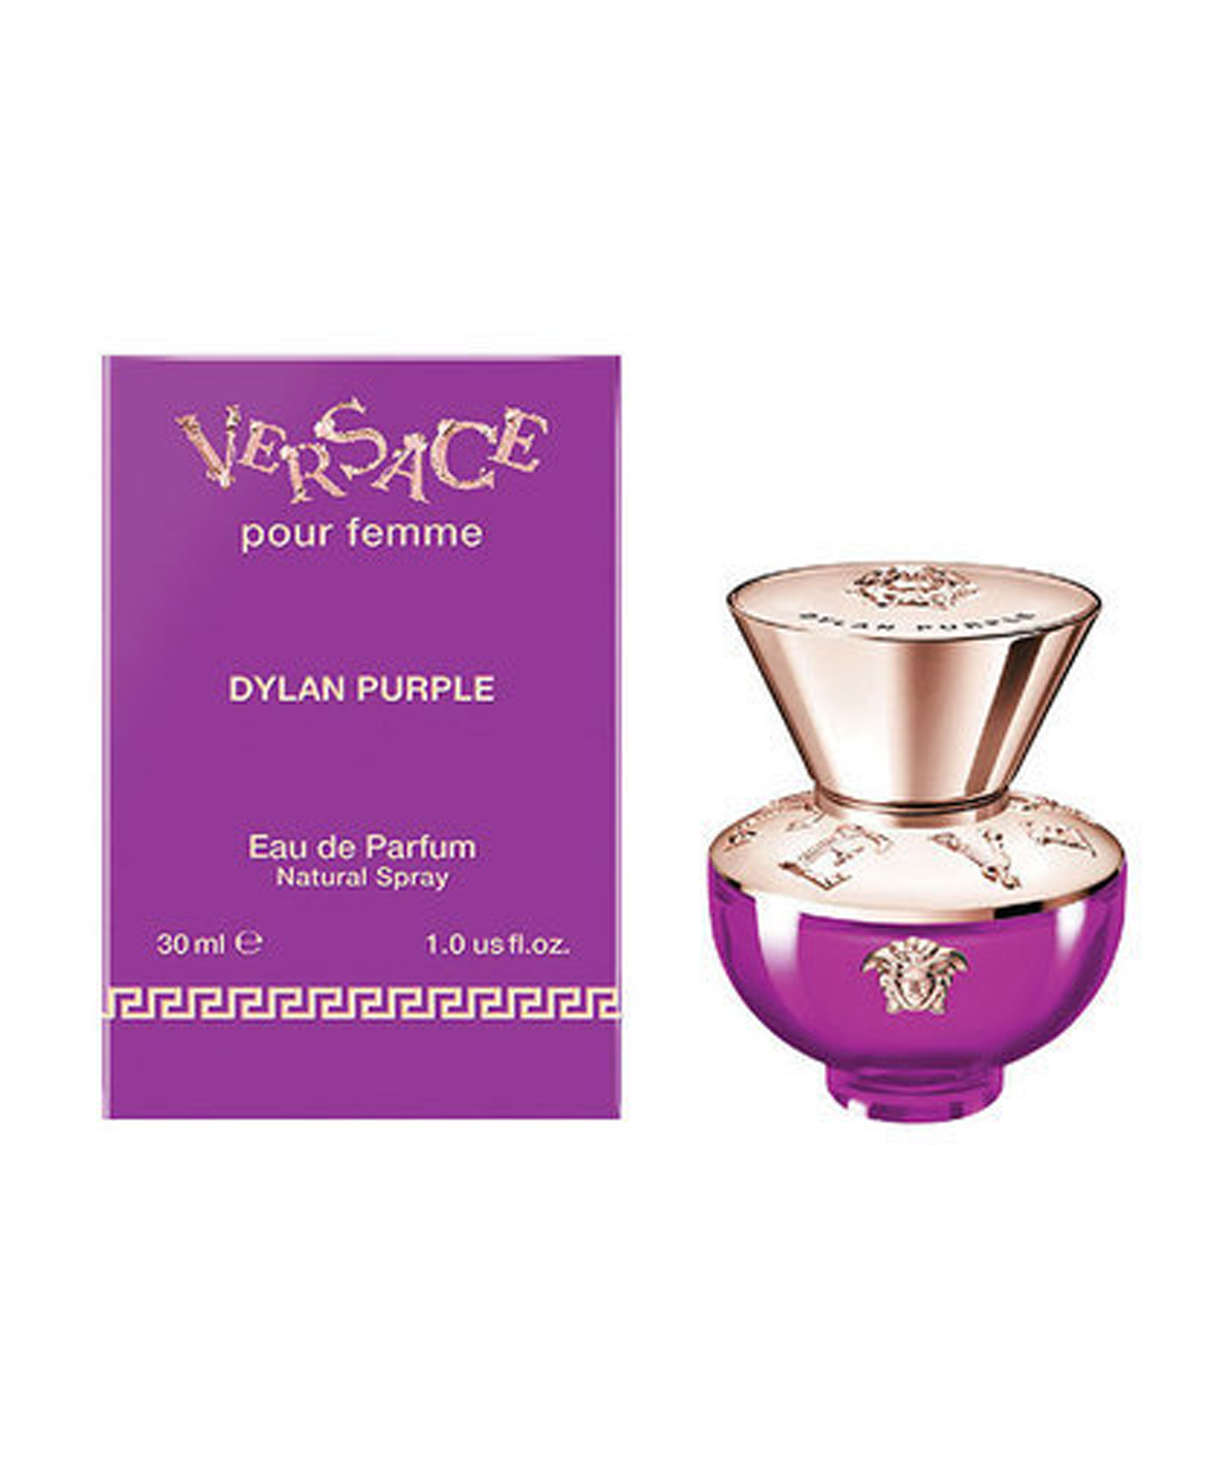 Perfume «Versace» Dylan Purple, for women, 30 ml